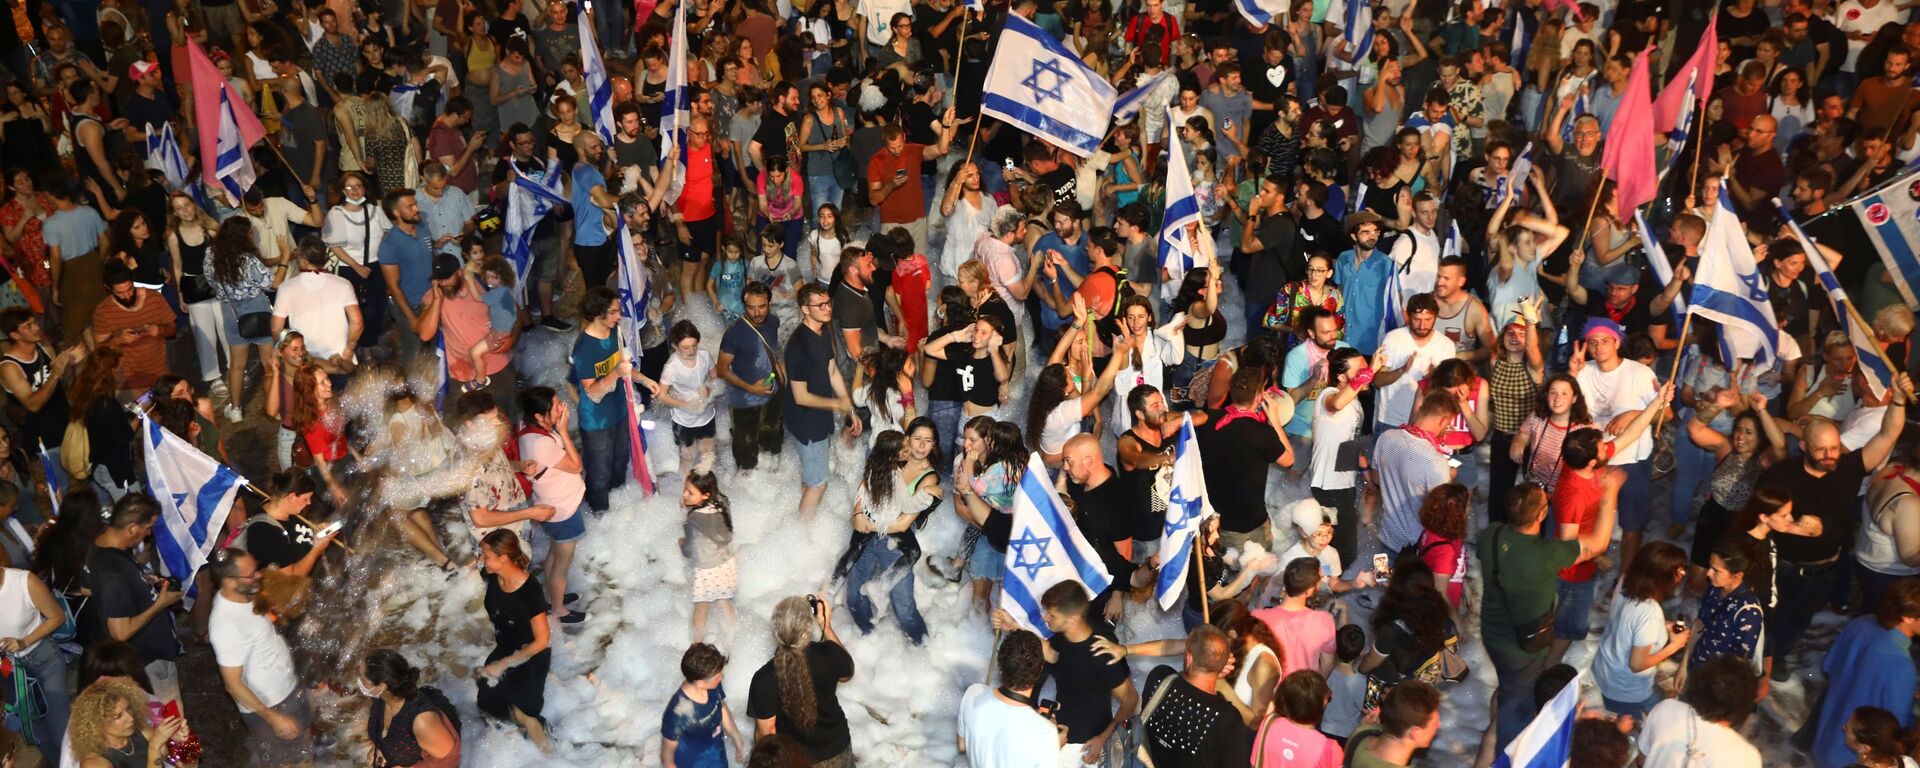 Slavlje na ulicama Tel Aviva posle izbora nove izraelske vlade - Sputnik Srbija, 1920, 13.06.2021